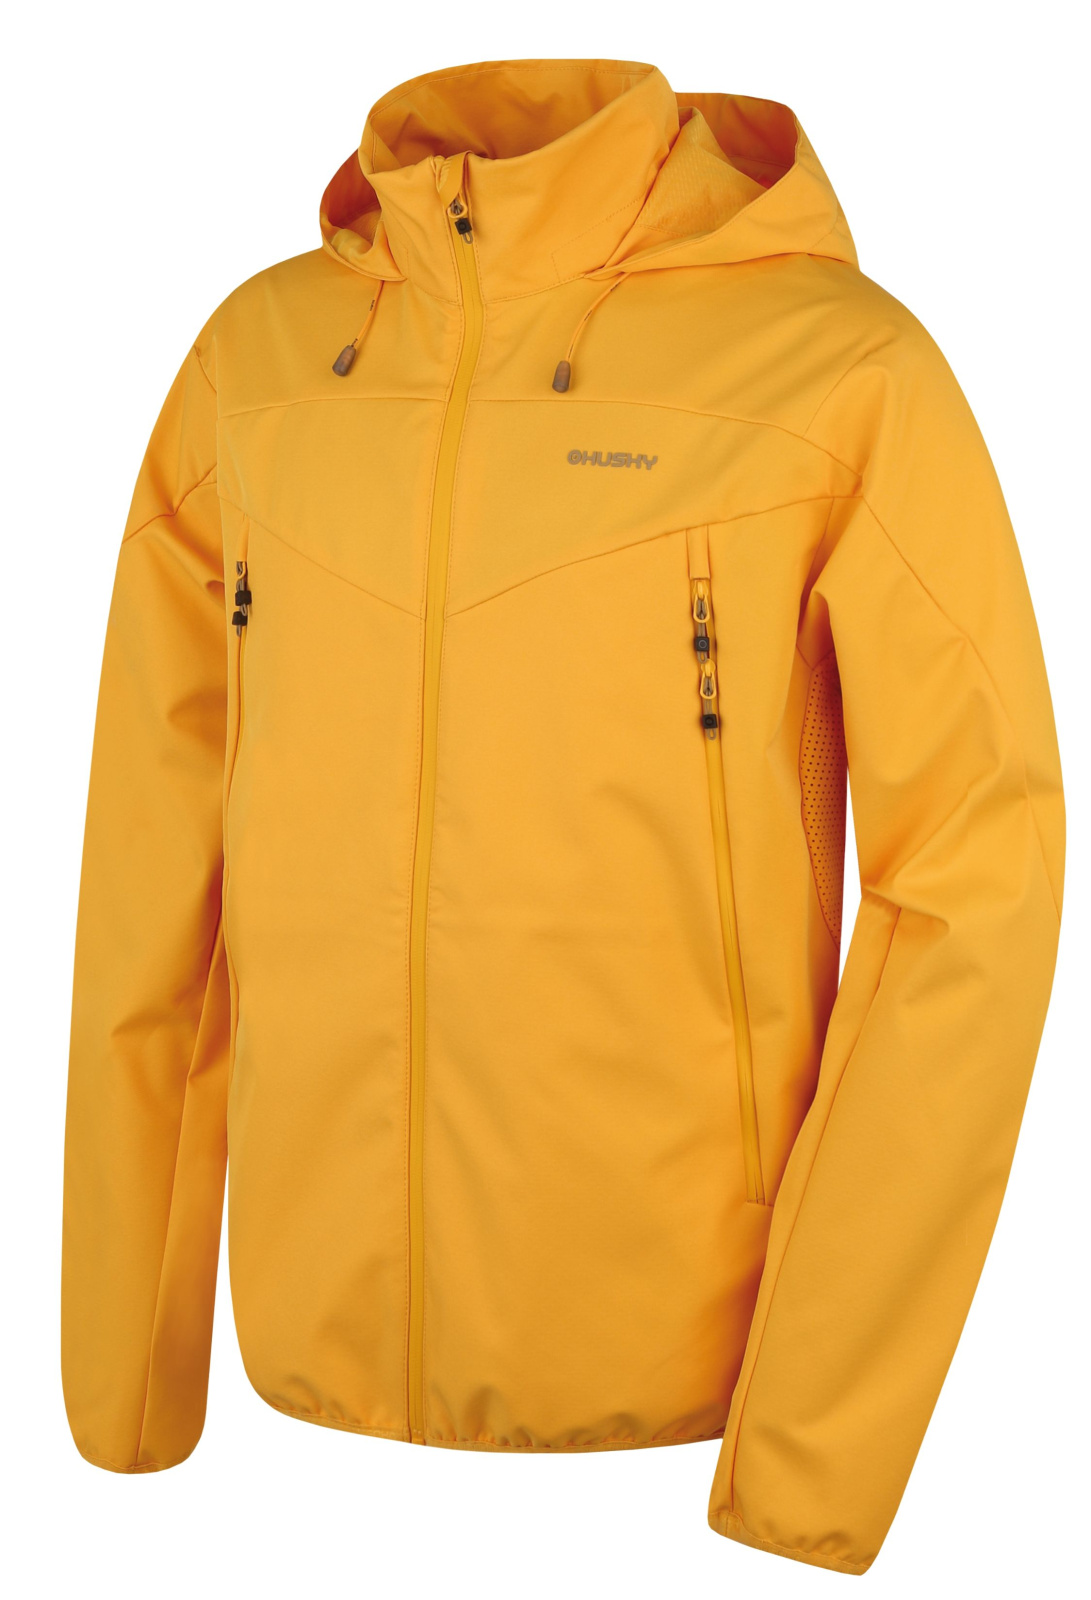 Men's softshell jacket HUSKY Sonny M yellow